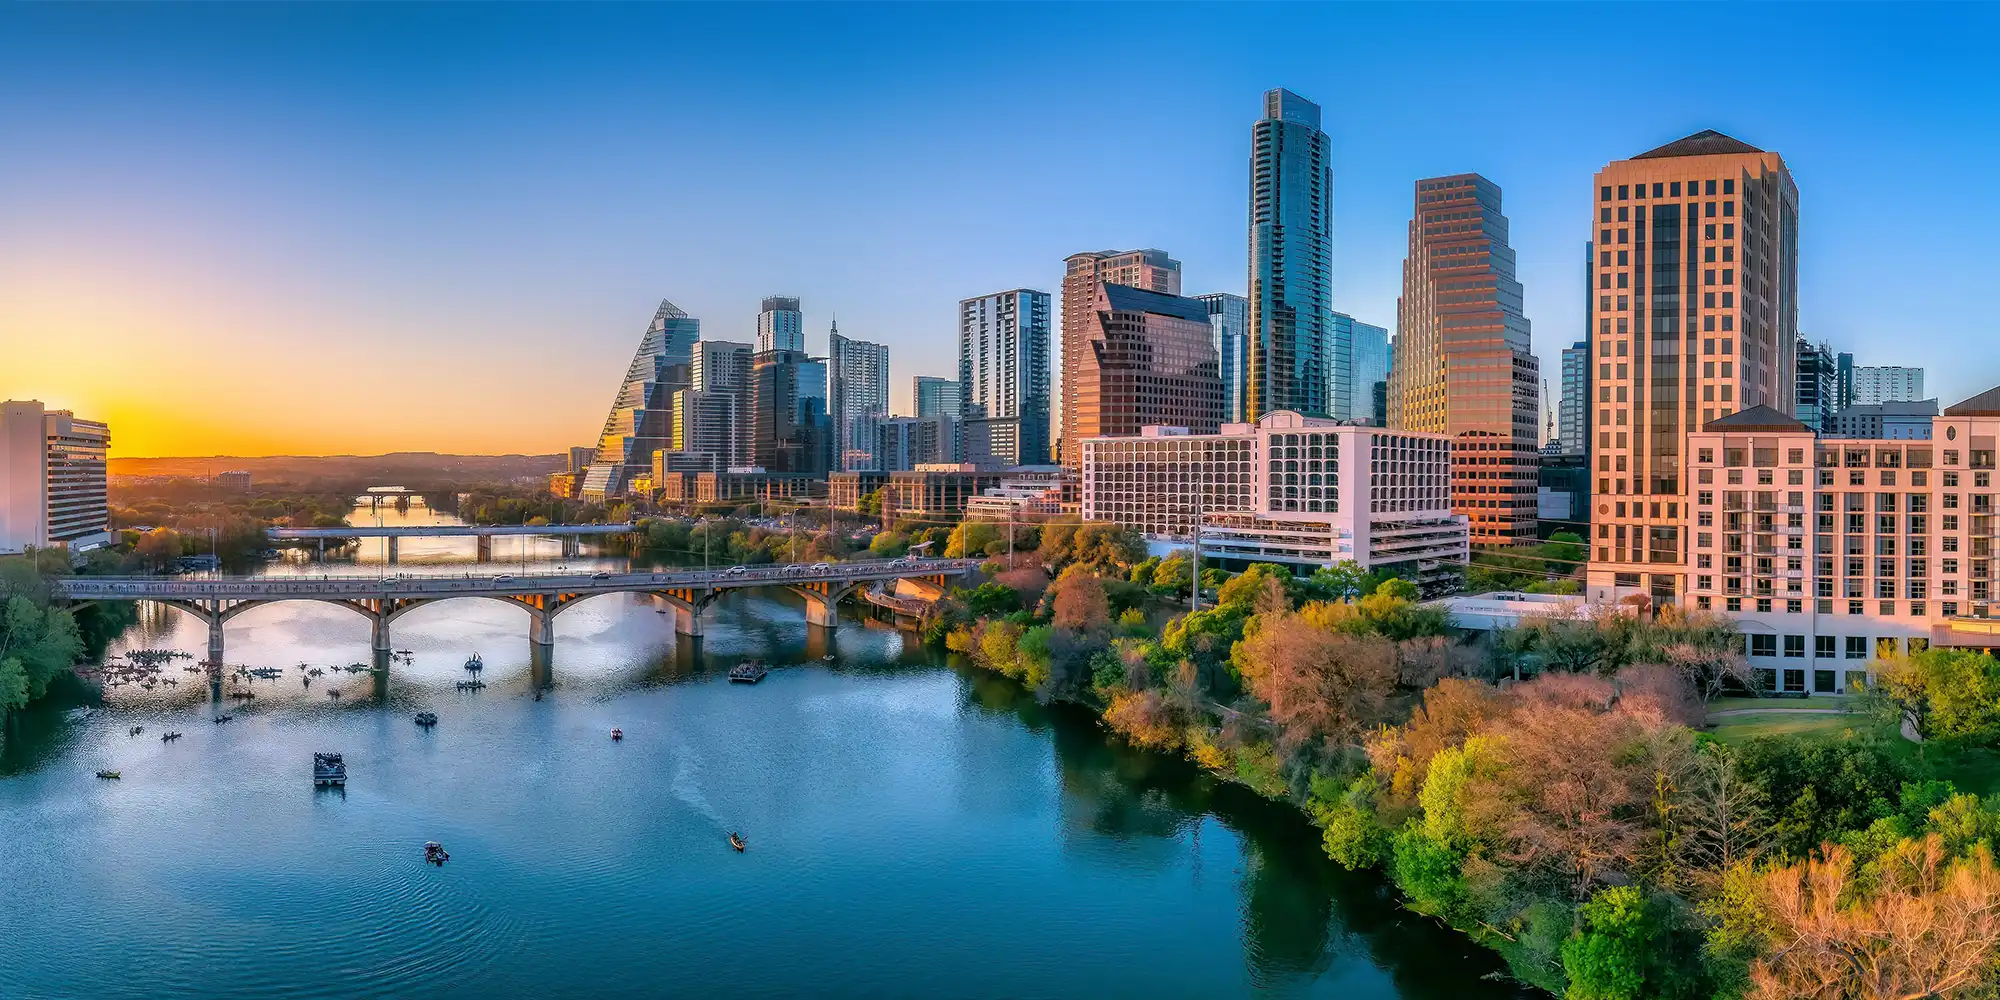 Scenic view of Austin location